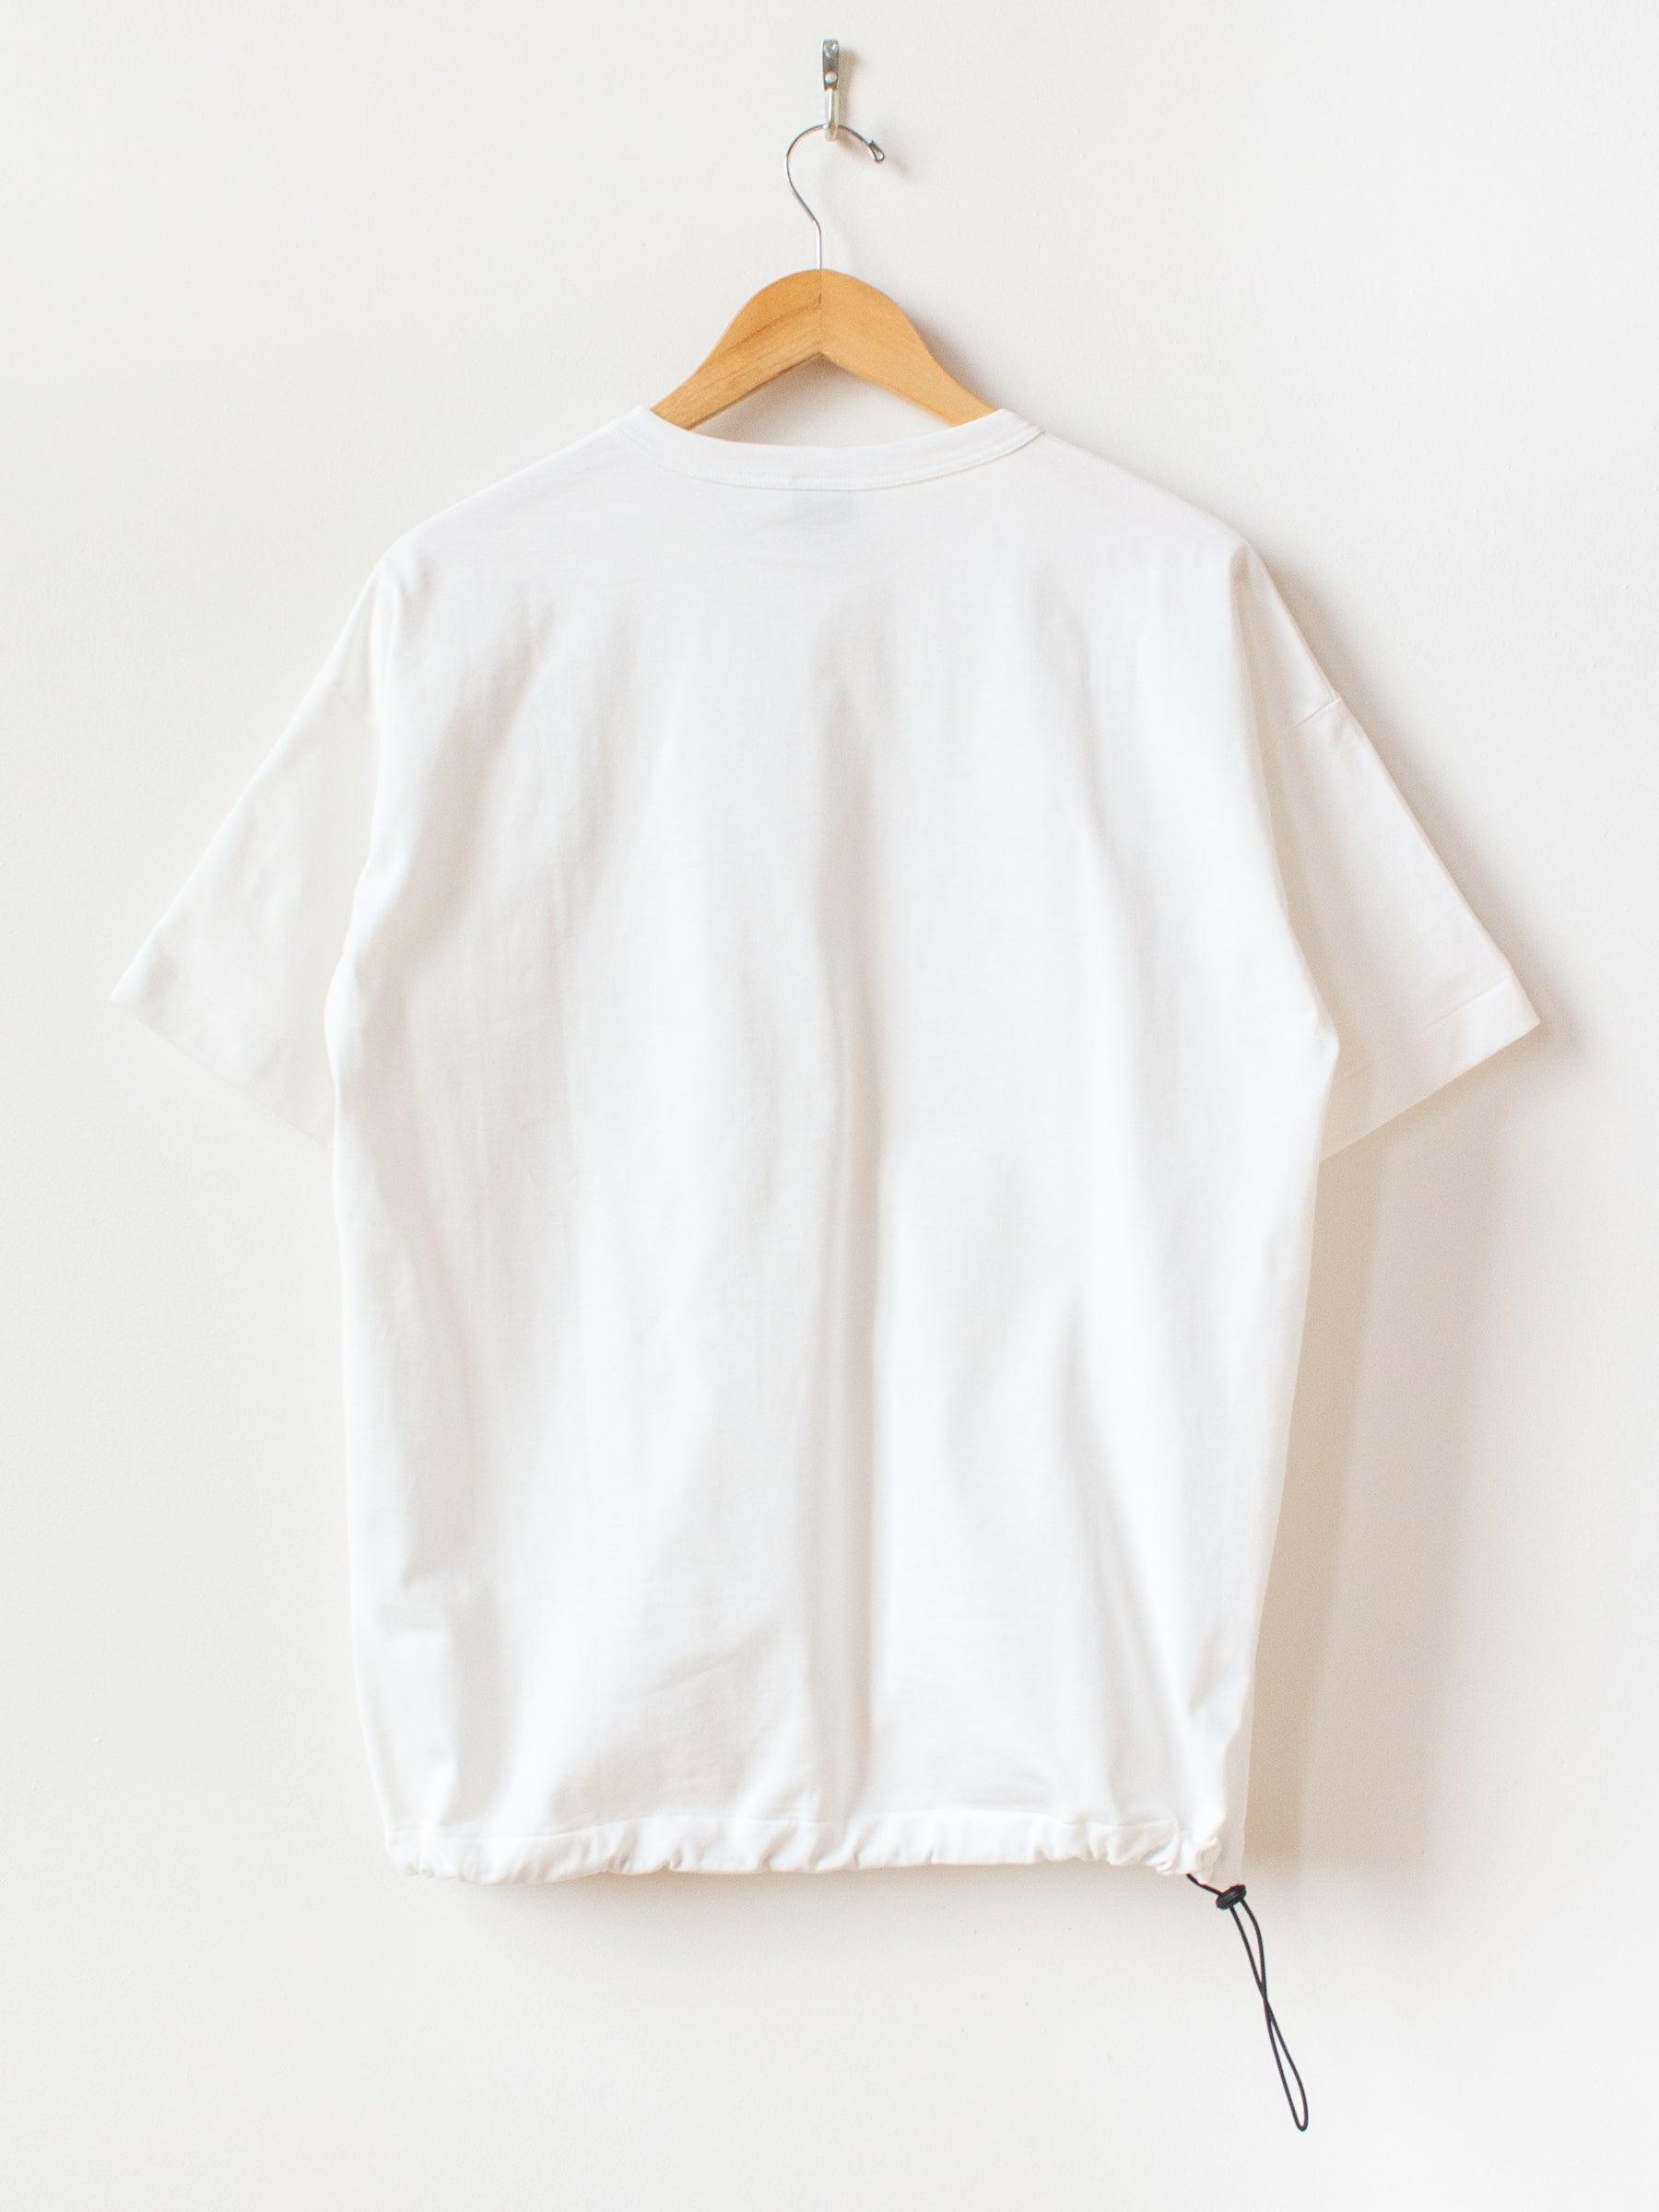 Namu Shop - A Vontade Silket Athletic T-Shirt - White